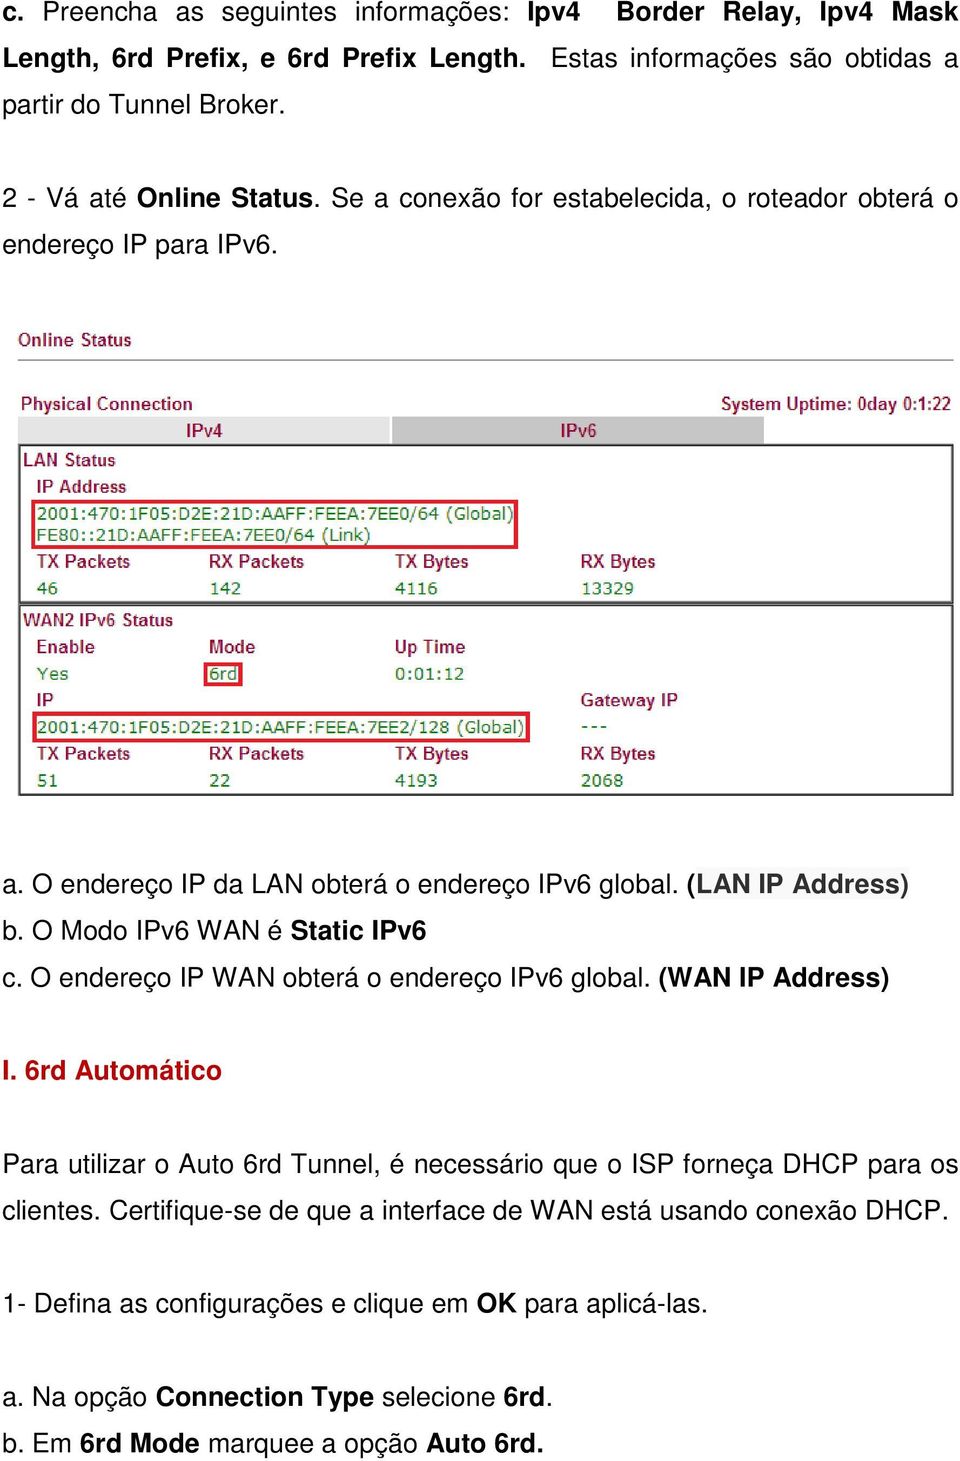 O Modo IPv6 WAN é Static IPv6 c. O endereço IP WAN obterá o endereço IPv6 global. (WAN IP Address) I.